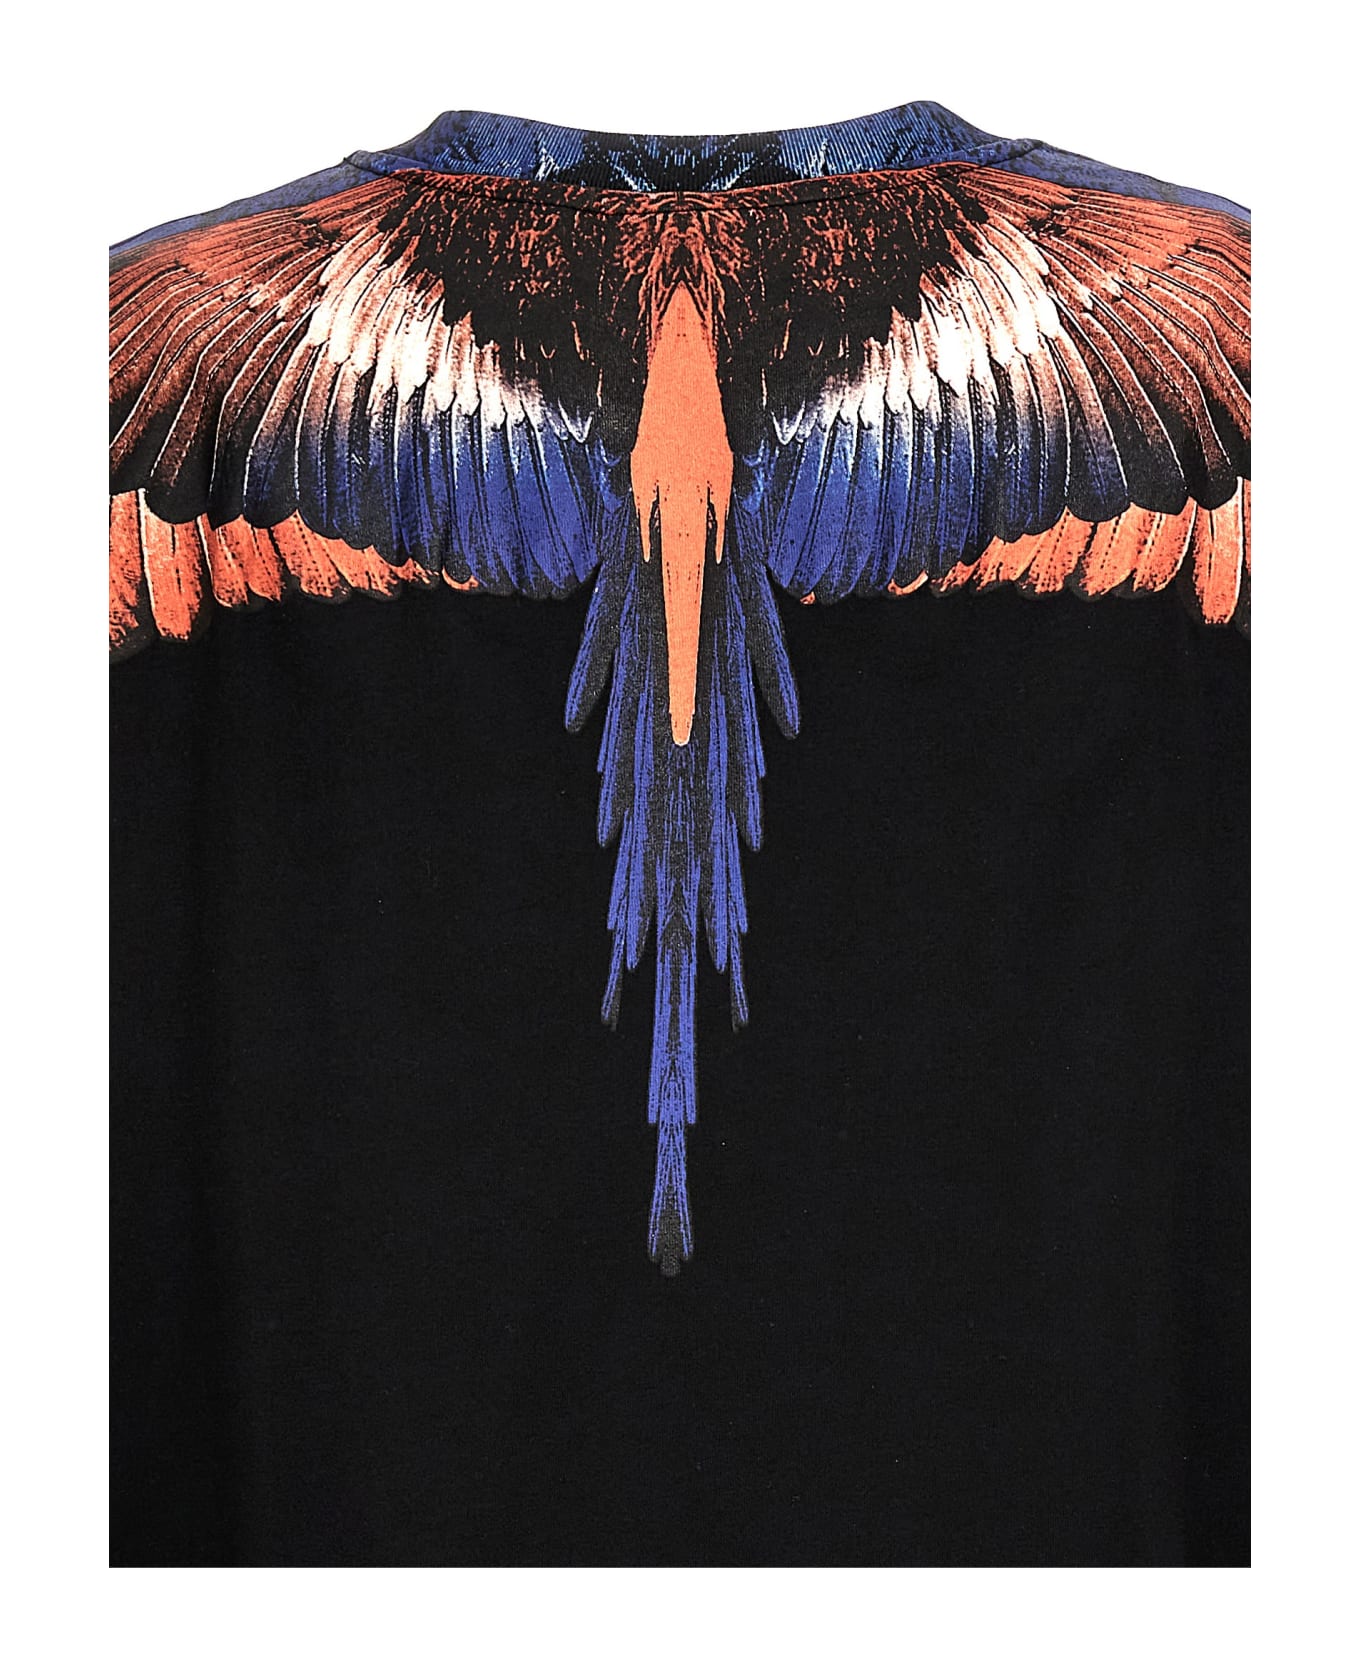 Marcelo Burlon 'icon Wings' T-shirt - Black  